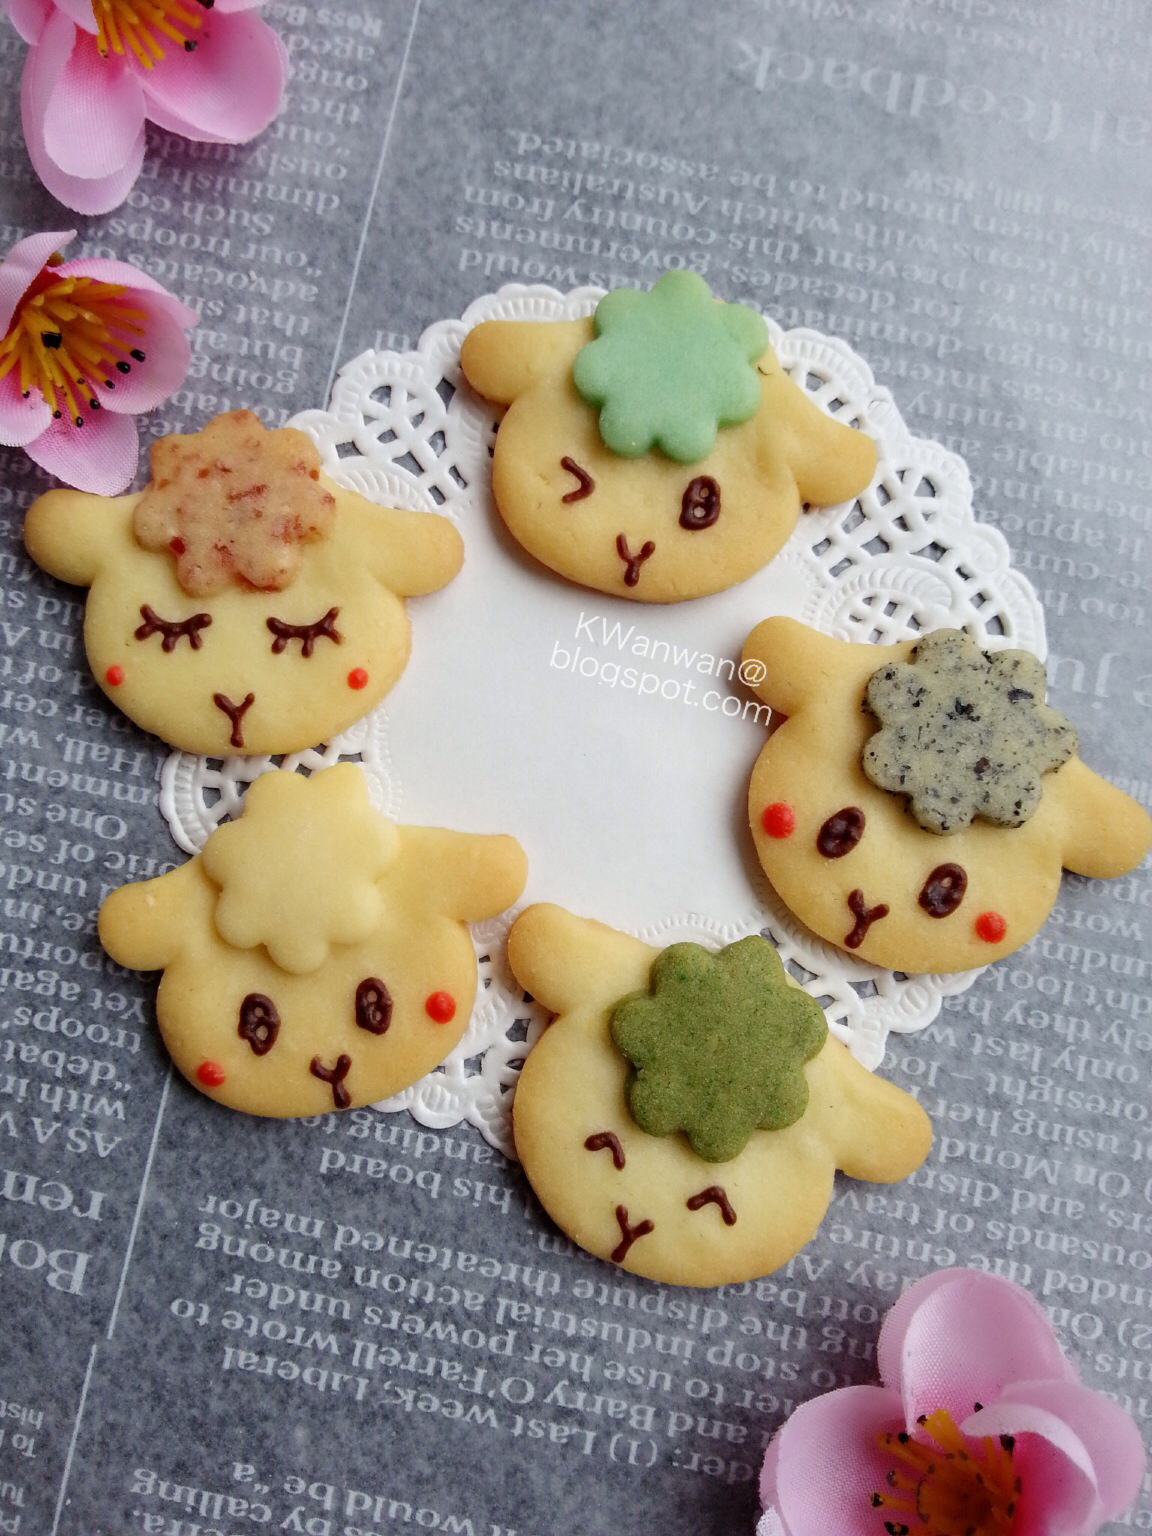 Baking Life 简单の生活: 小熊造型饼干